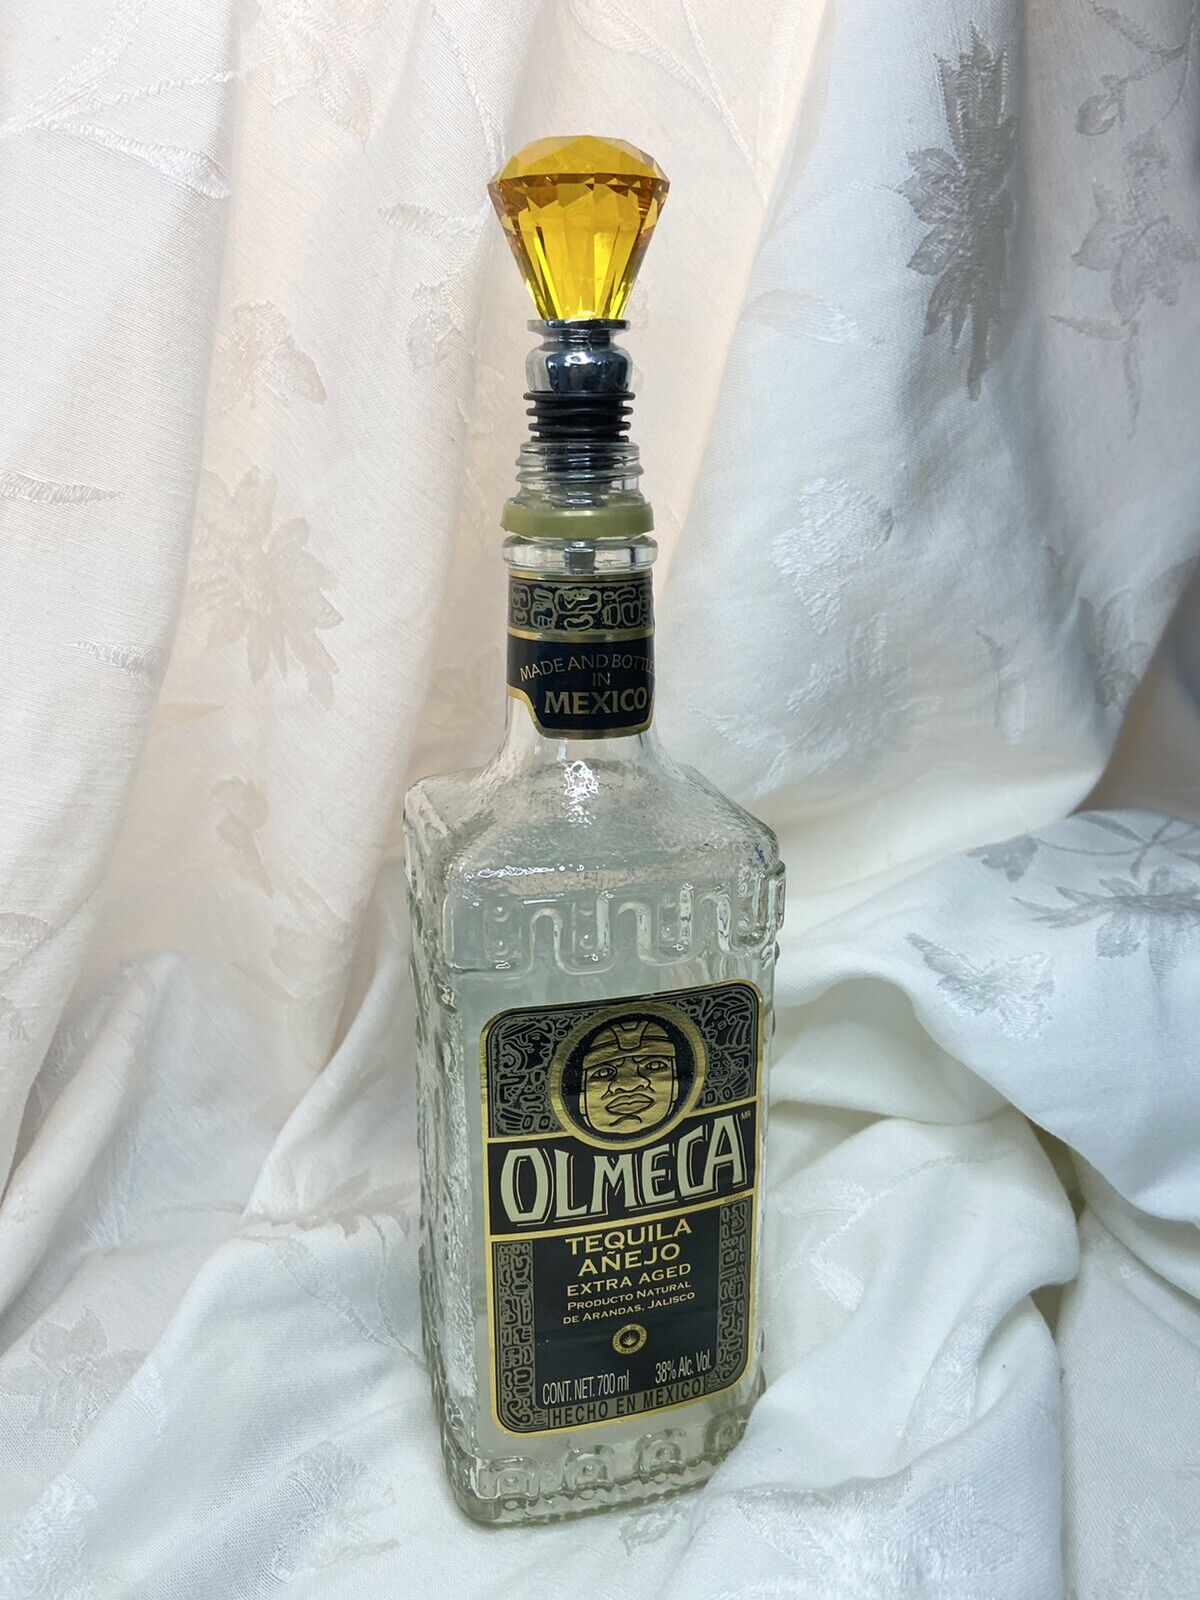 Empty Tequila bottle Olmec 700ml, Comes With A Bottle Stopper